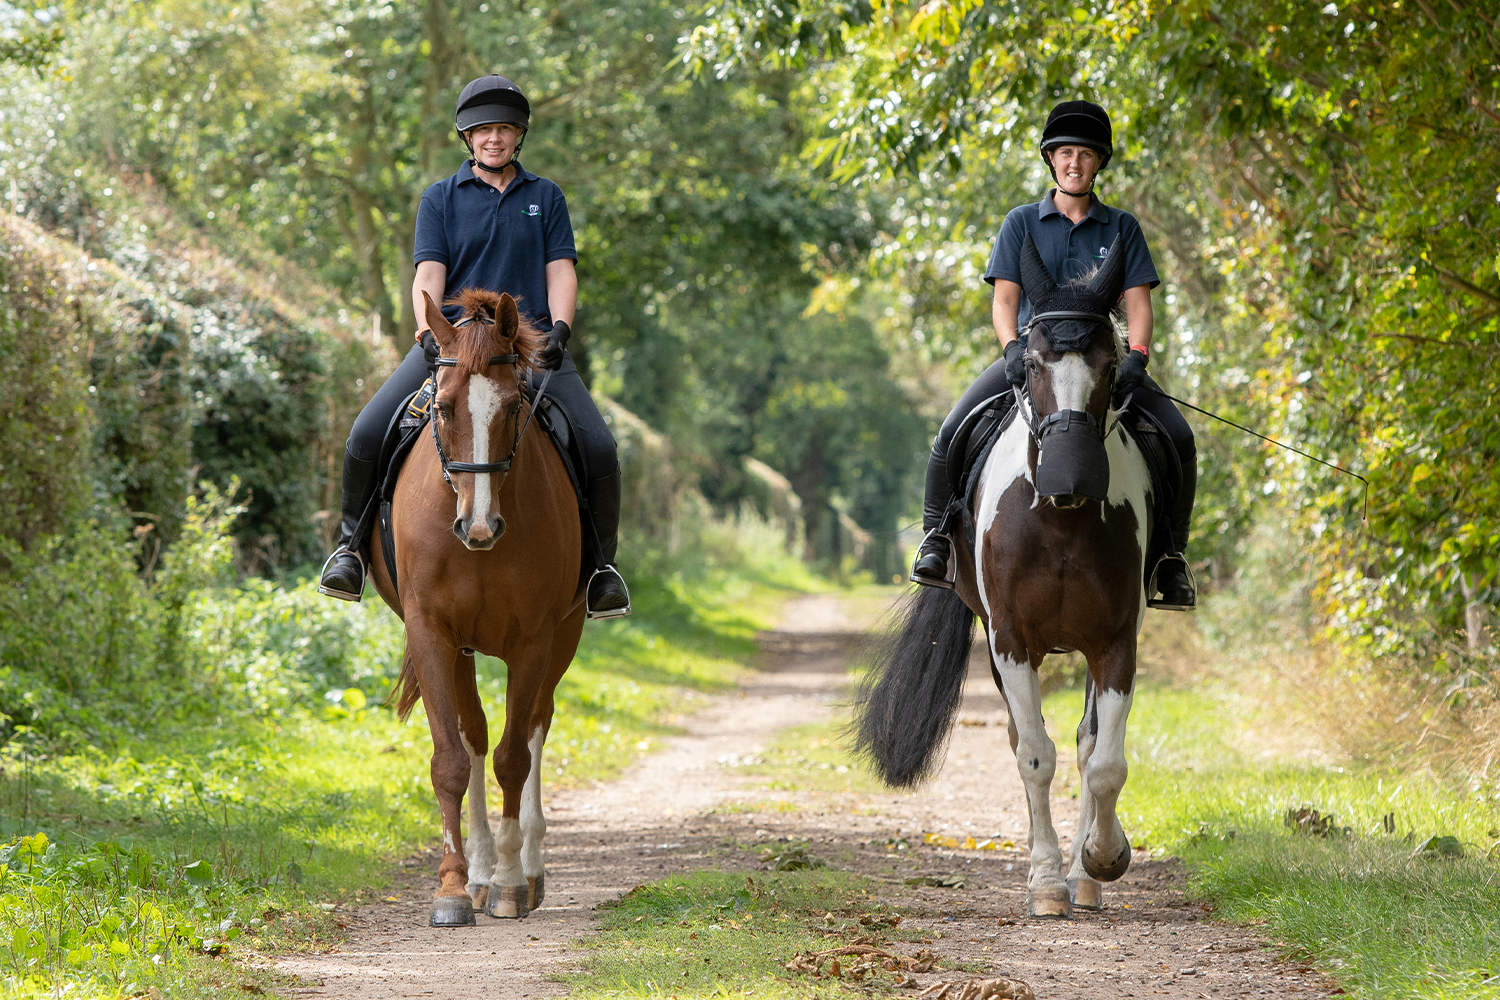 Welfare Wednesday Webinars return and consider how rider balance affects horses